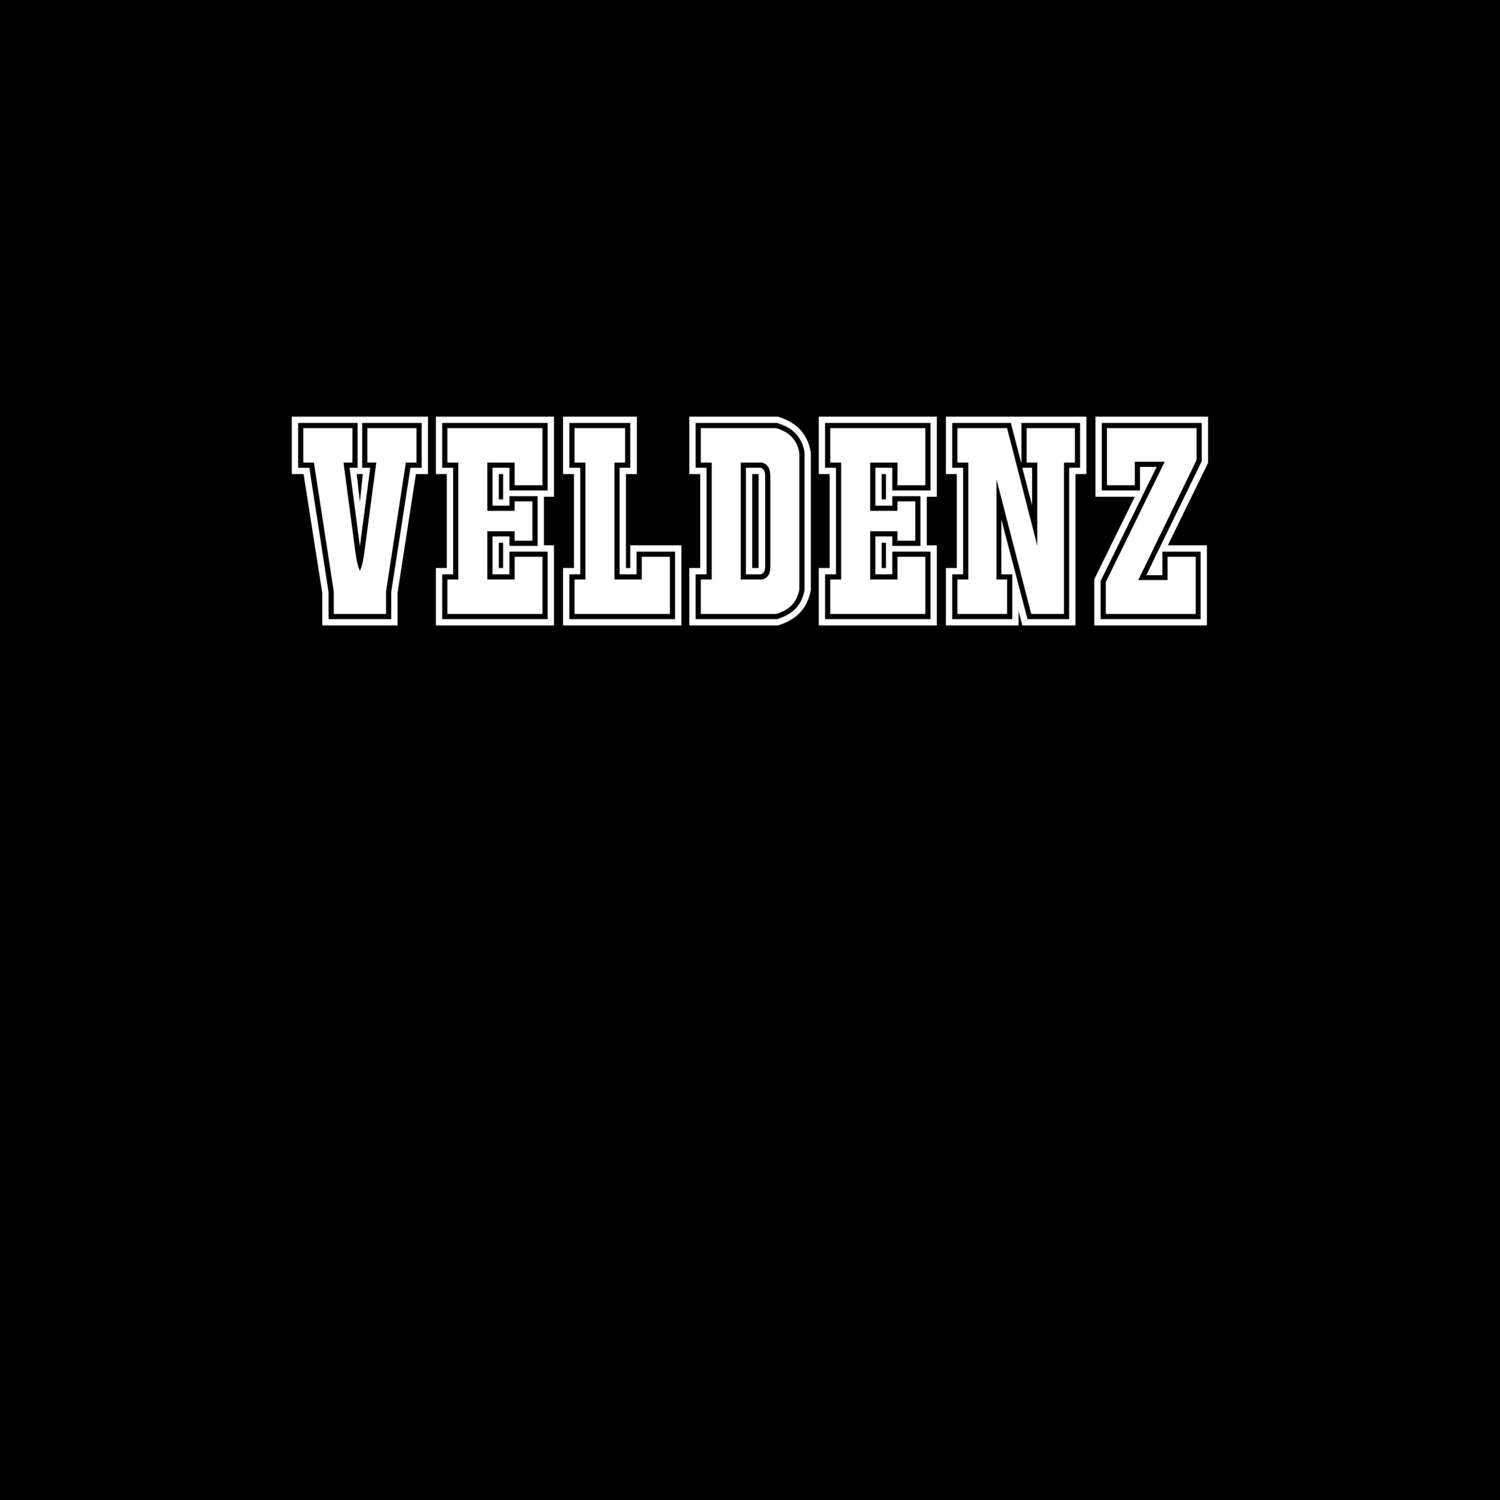 Veldenz T-Shirt »Classic«